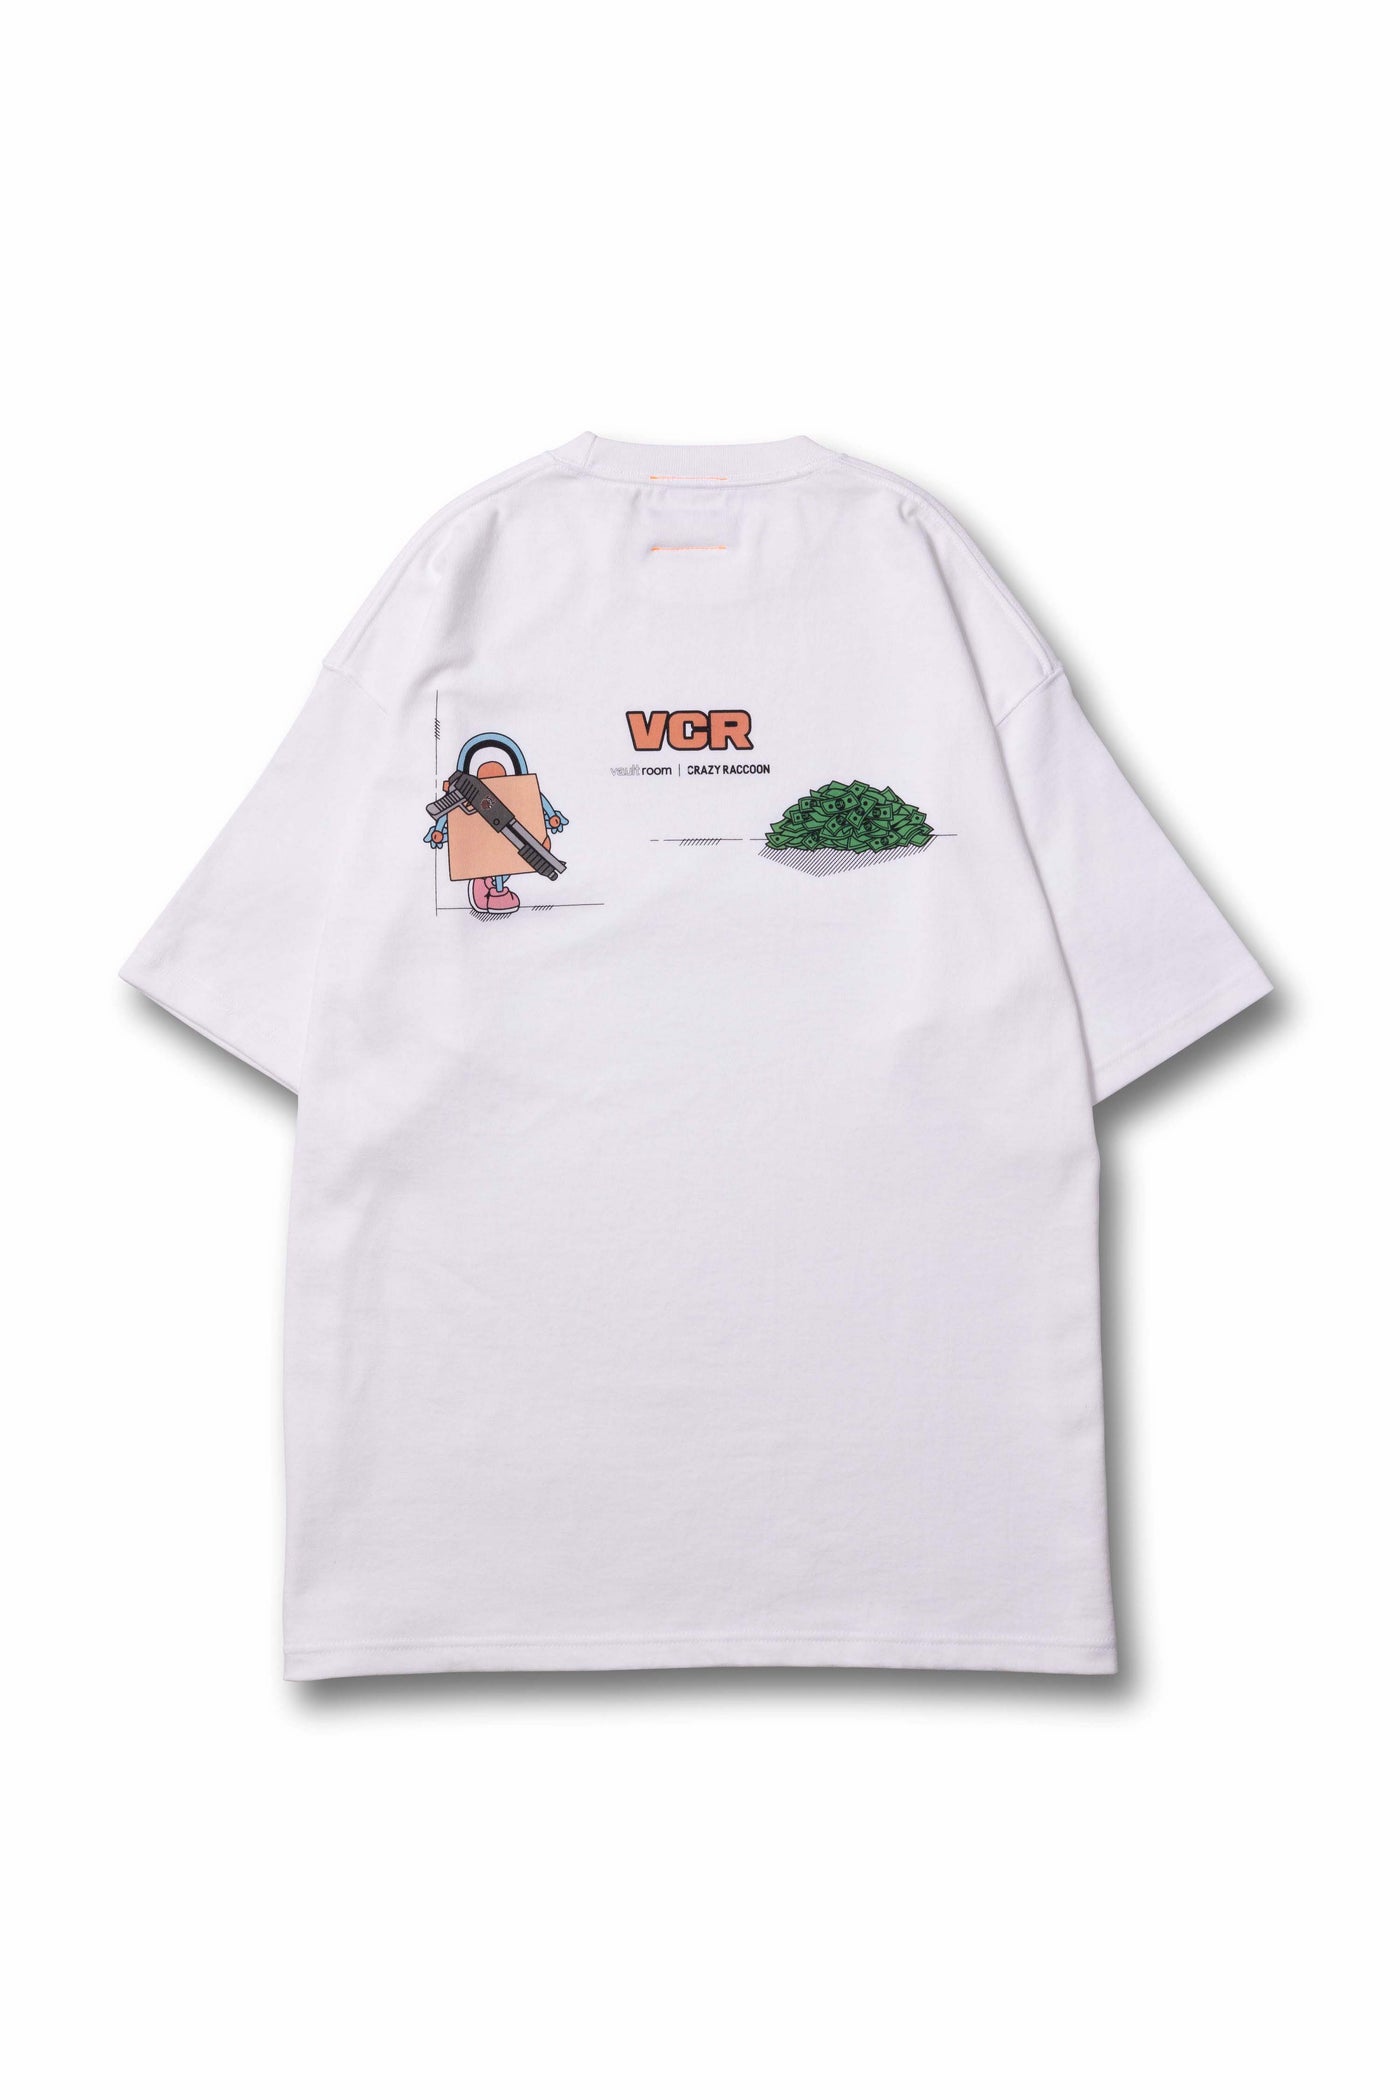 Vaultroom VCR TEE WHT XL - Tシャツ/カットソー(半袖/袖なし)